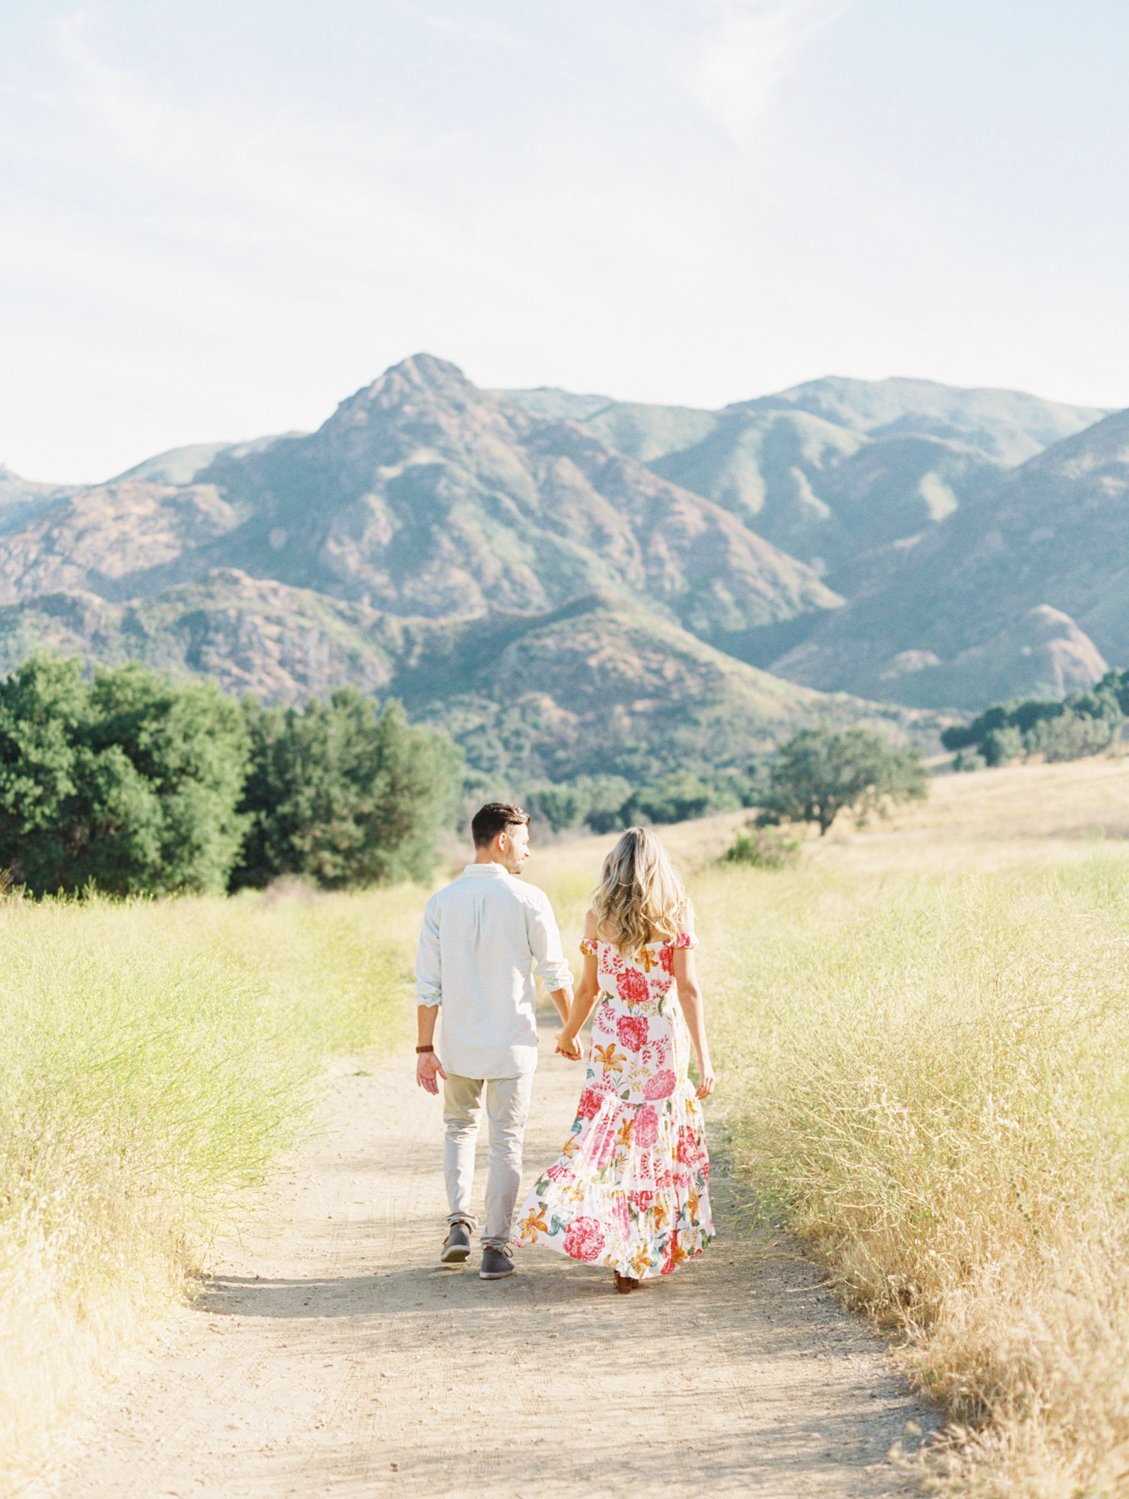 wisteria-photography.com | Wisteria Photography | Malibu Canyon | Weddings Engagement | Southern California Photographer-1.jpg